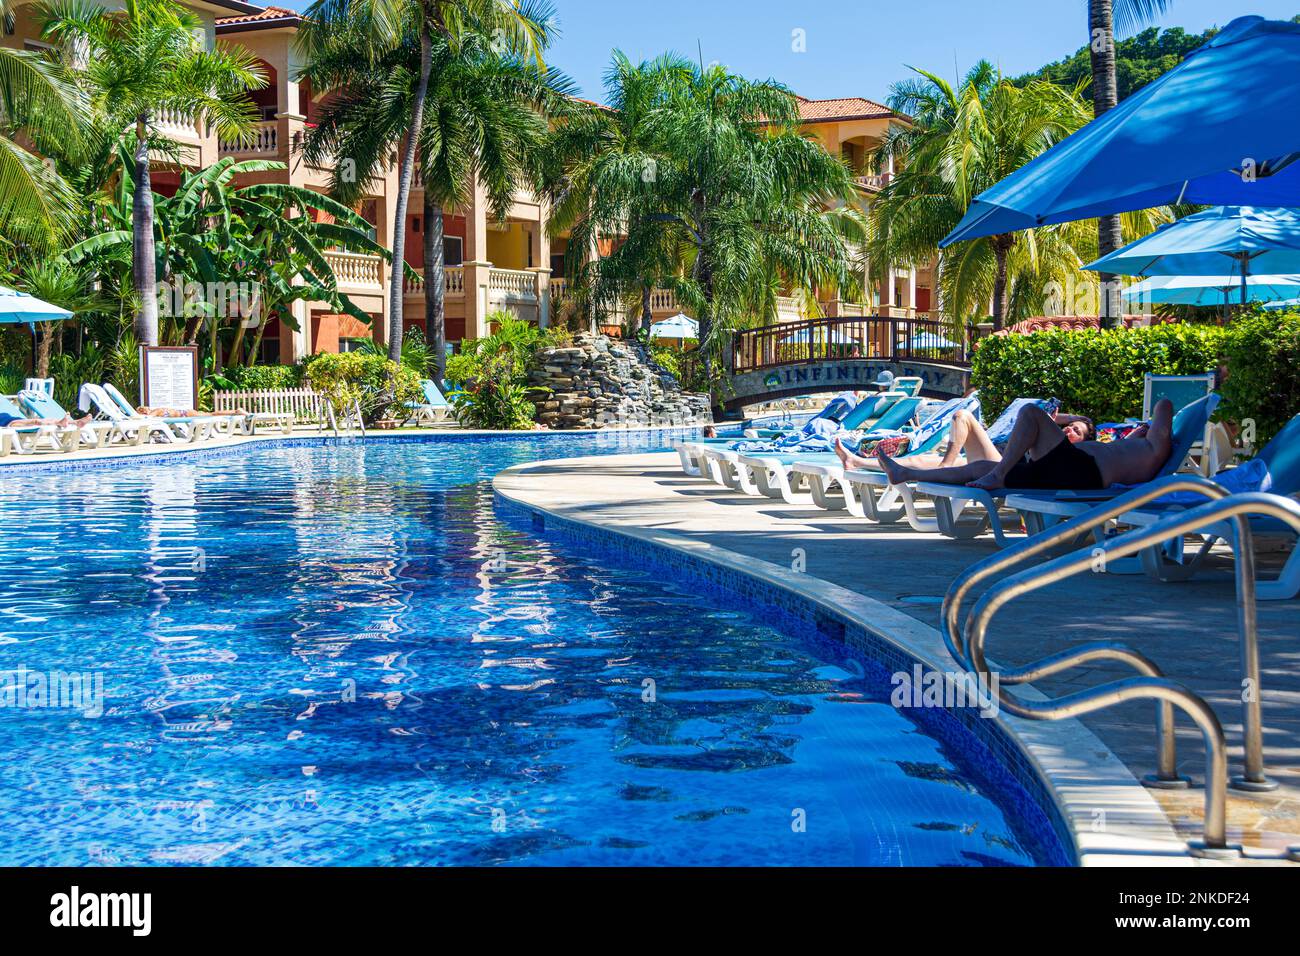 A pool angle of the Infinity Bay Hotel, Roatan, Honduras. Stock Photo